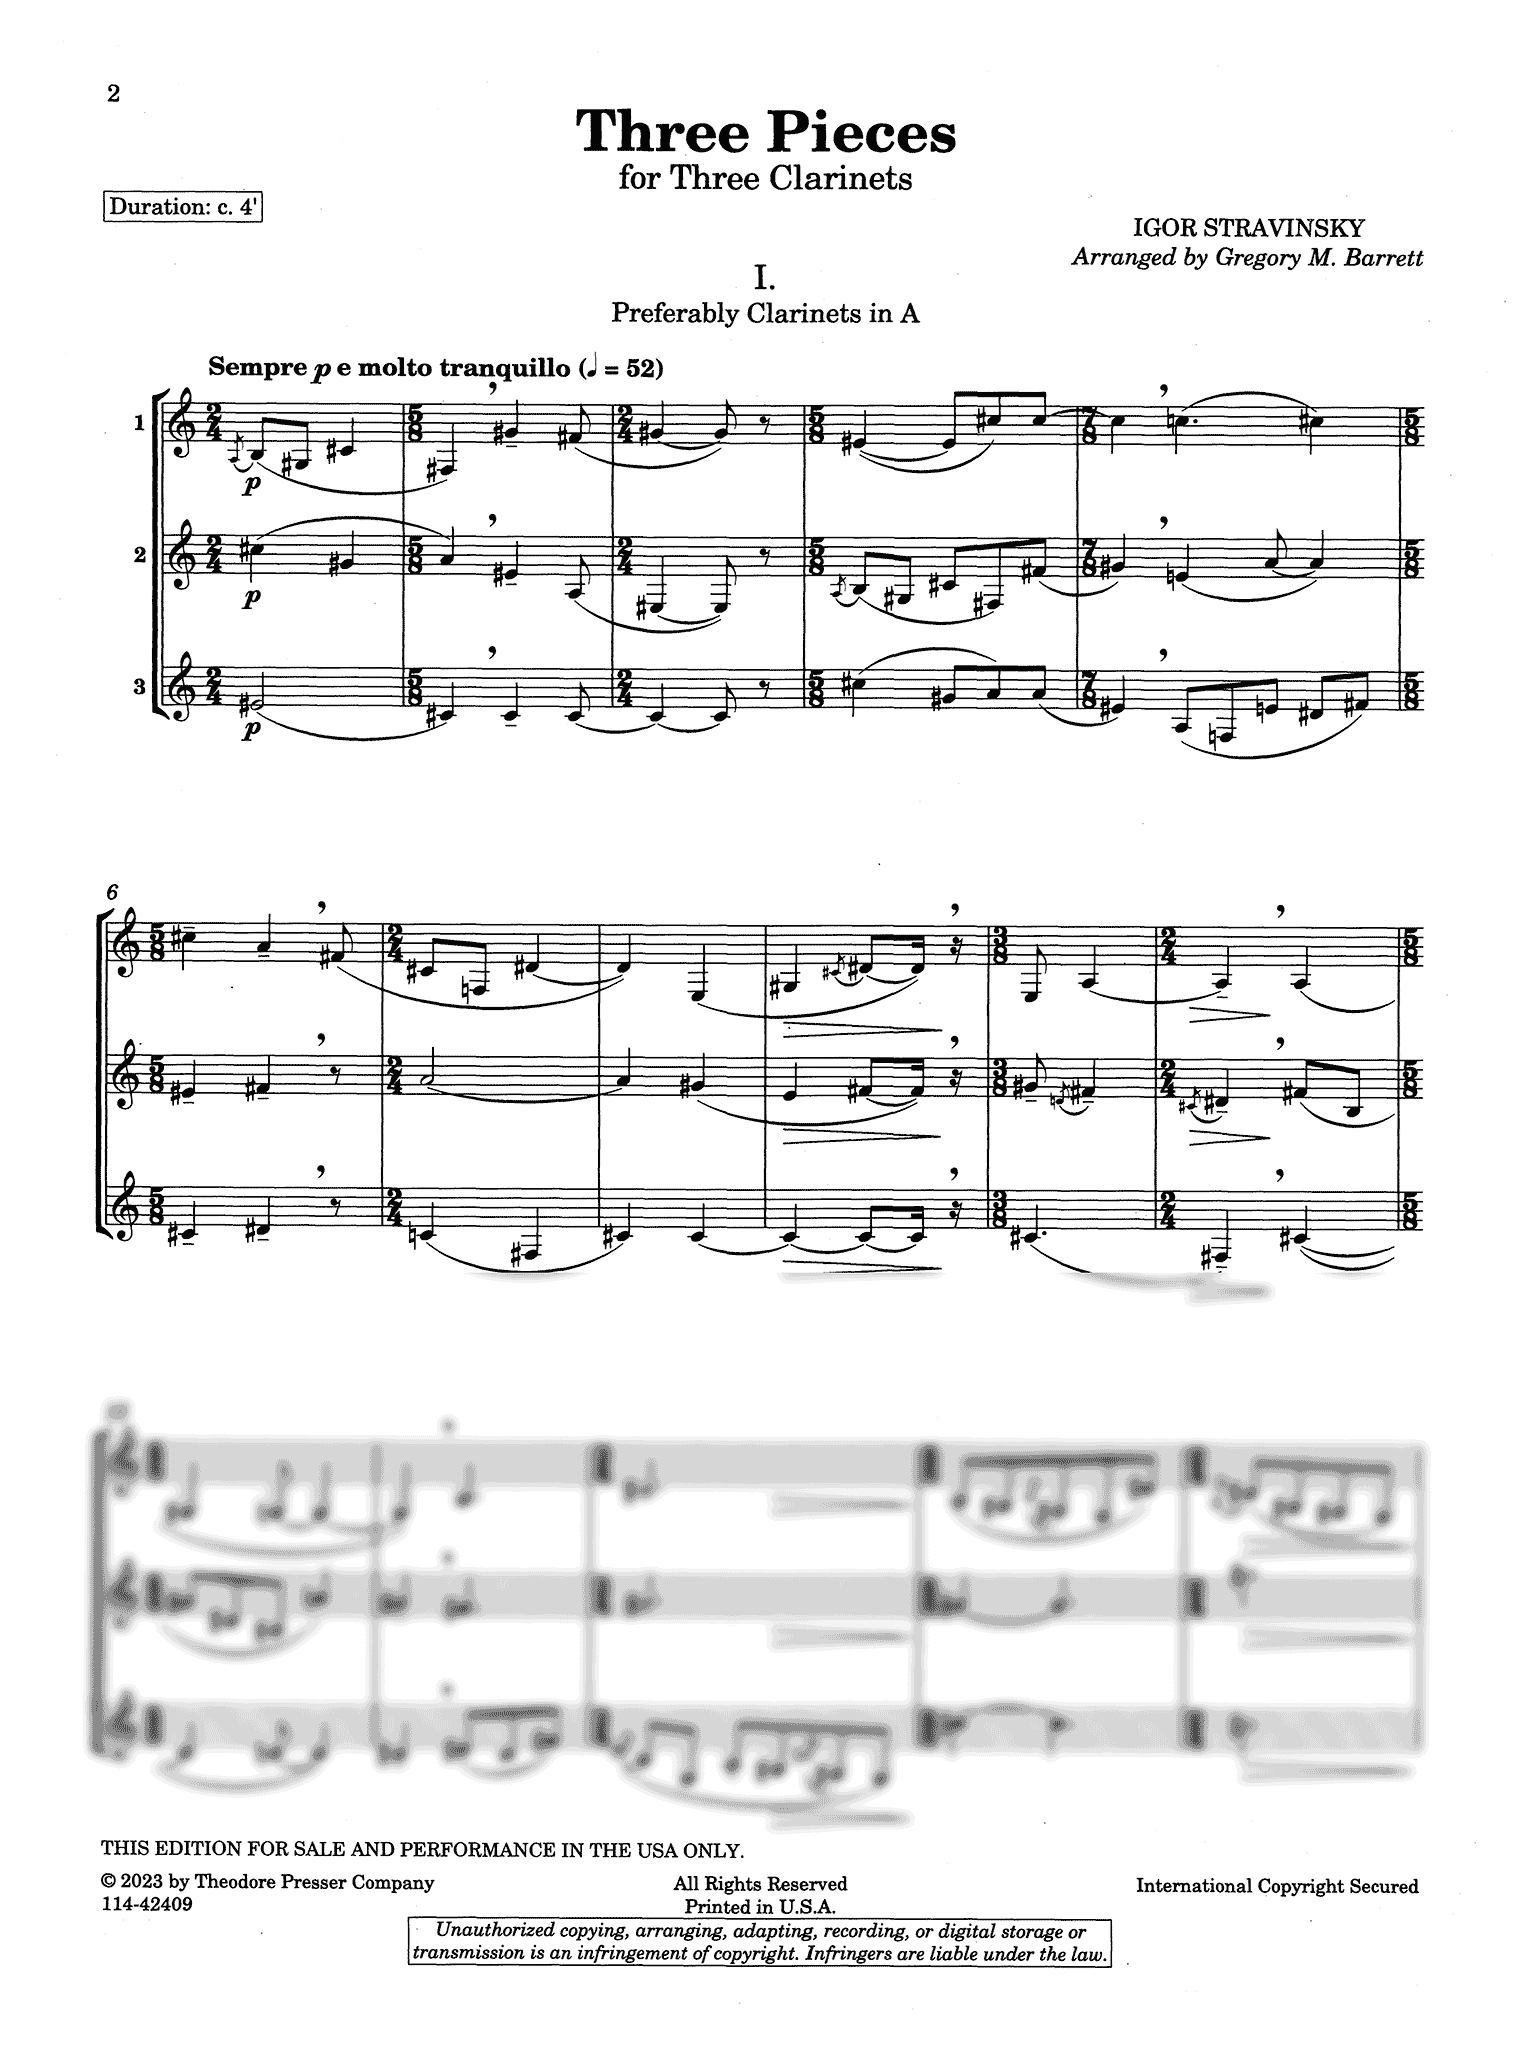 Stravinsky Three Pieces arranged for 3 Clarinets Barrett - Movement 1